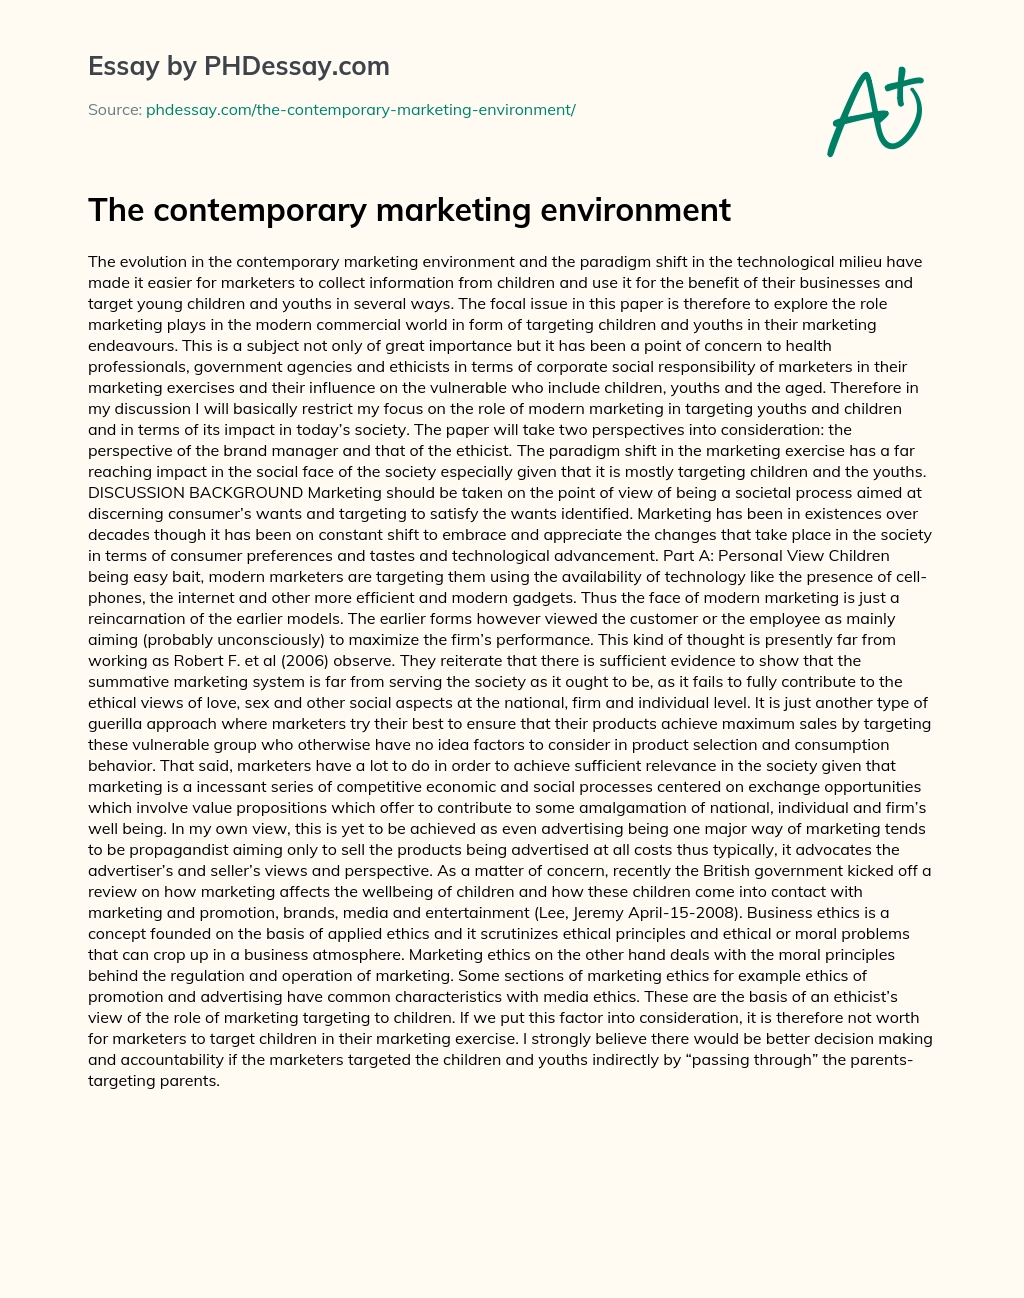 The contemporary marketing environment essay